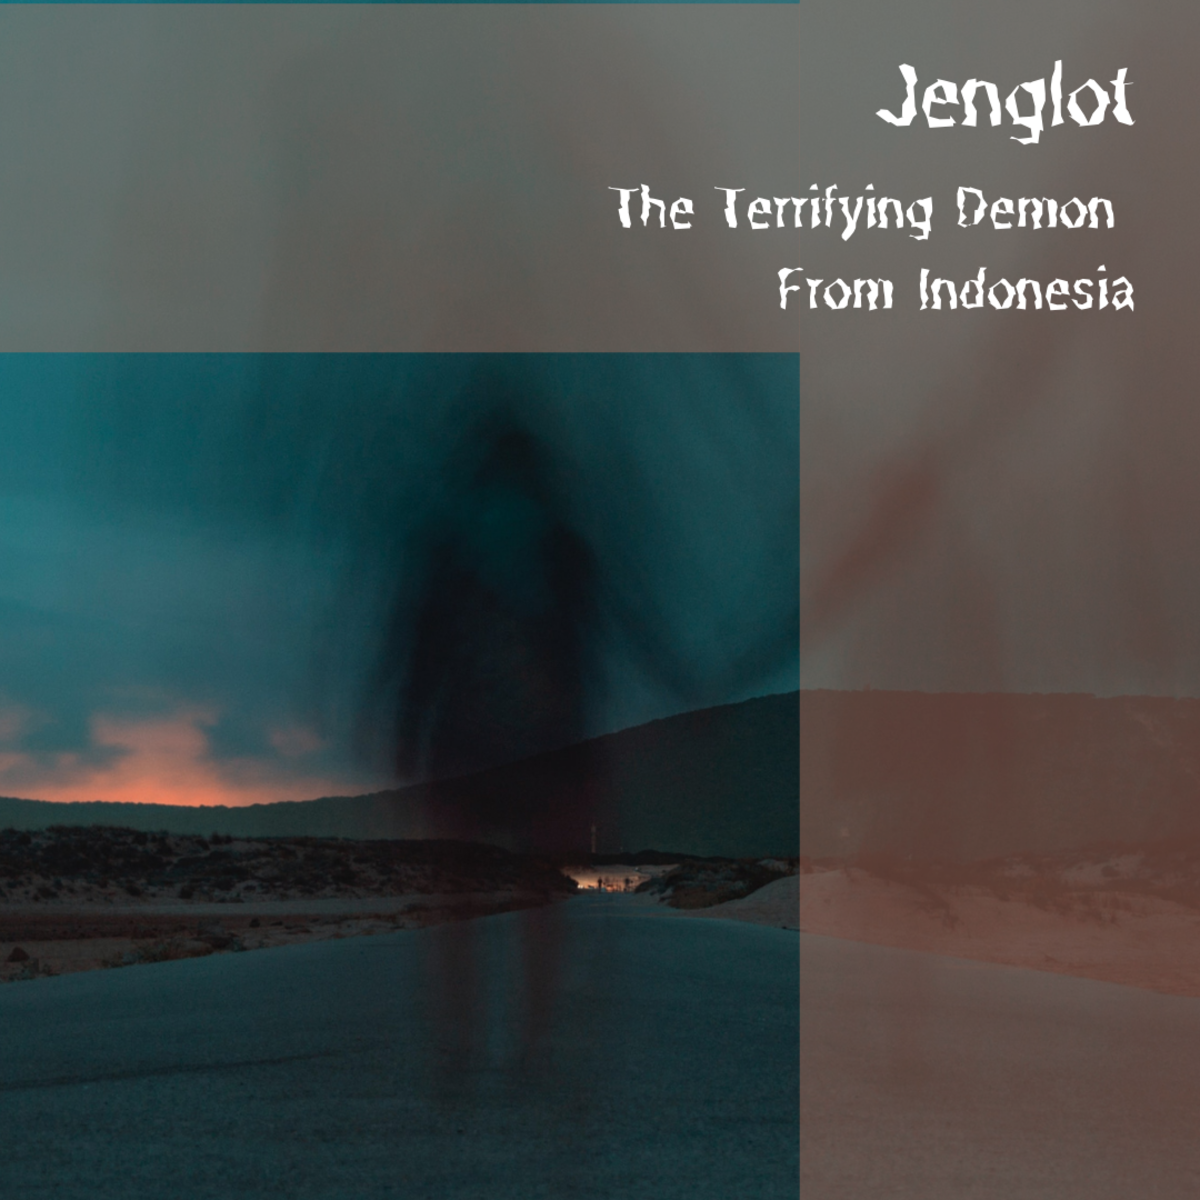 The Jenglot: Indonesian hair demon